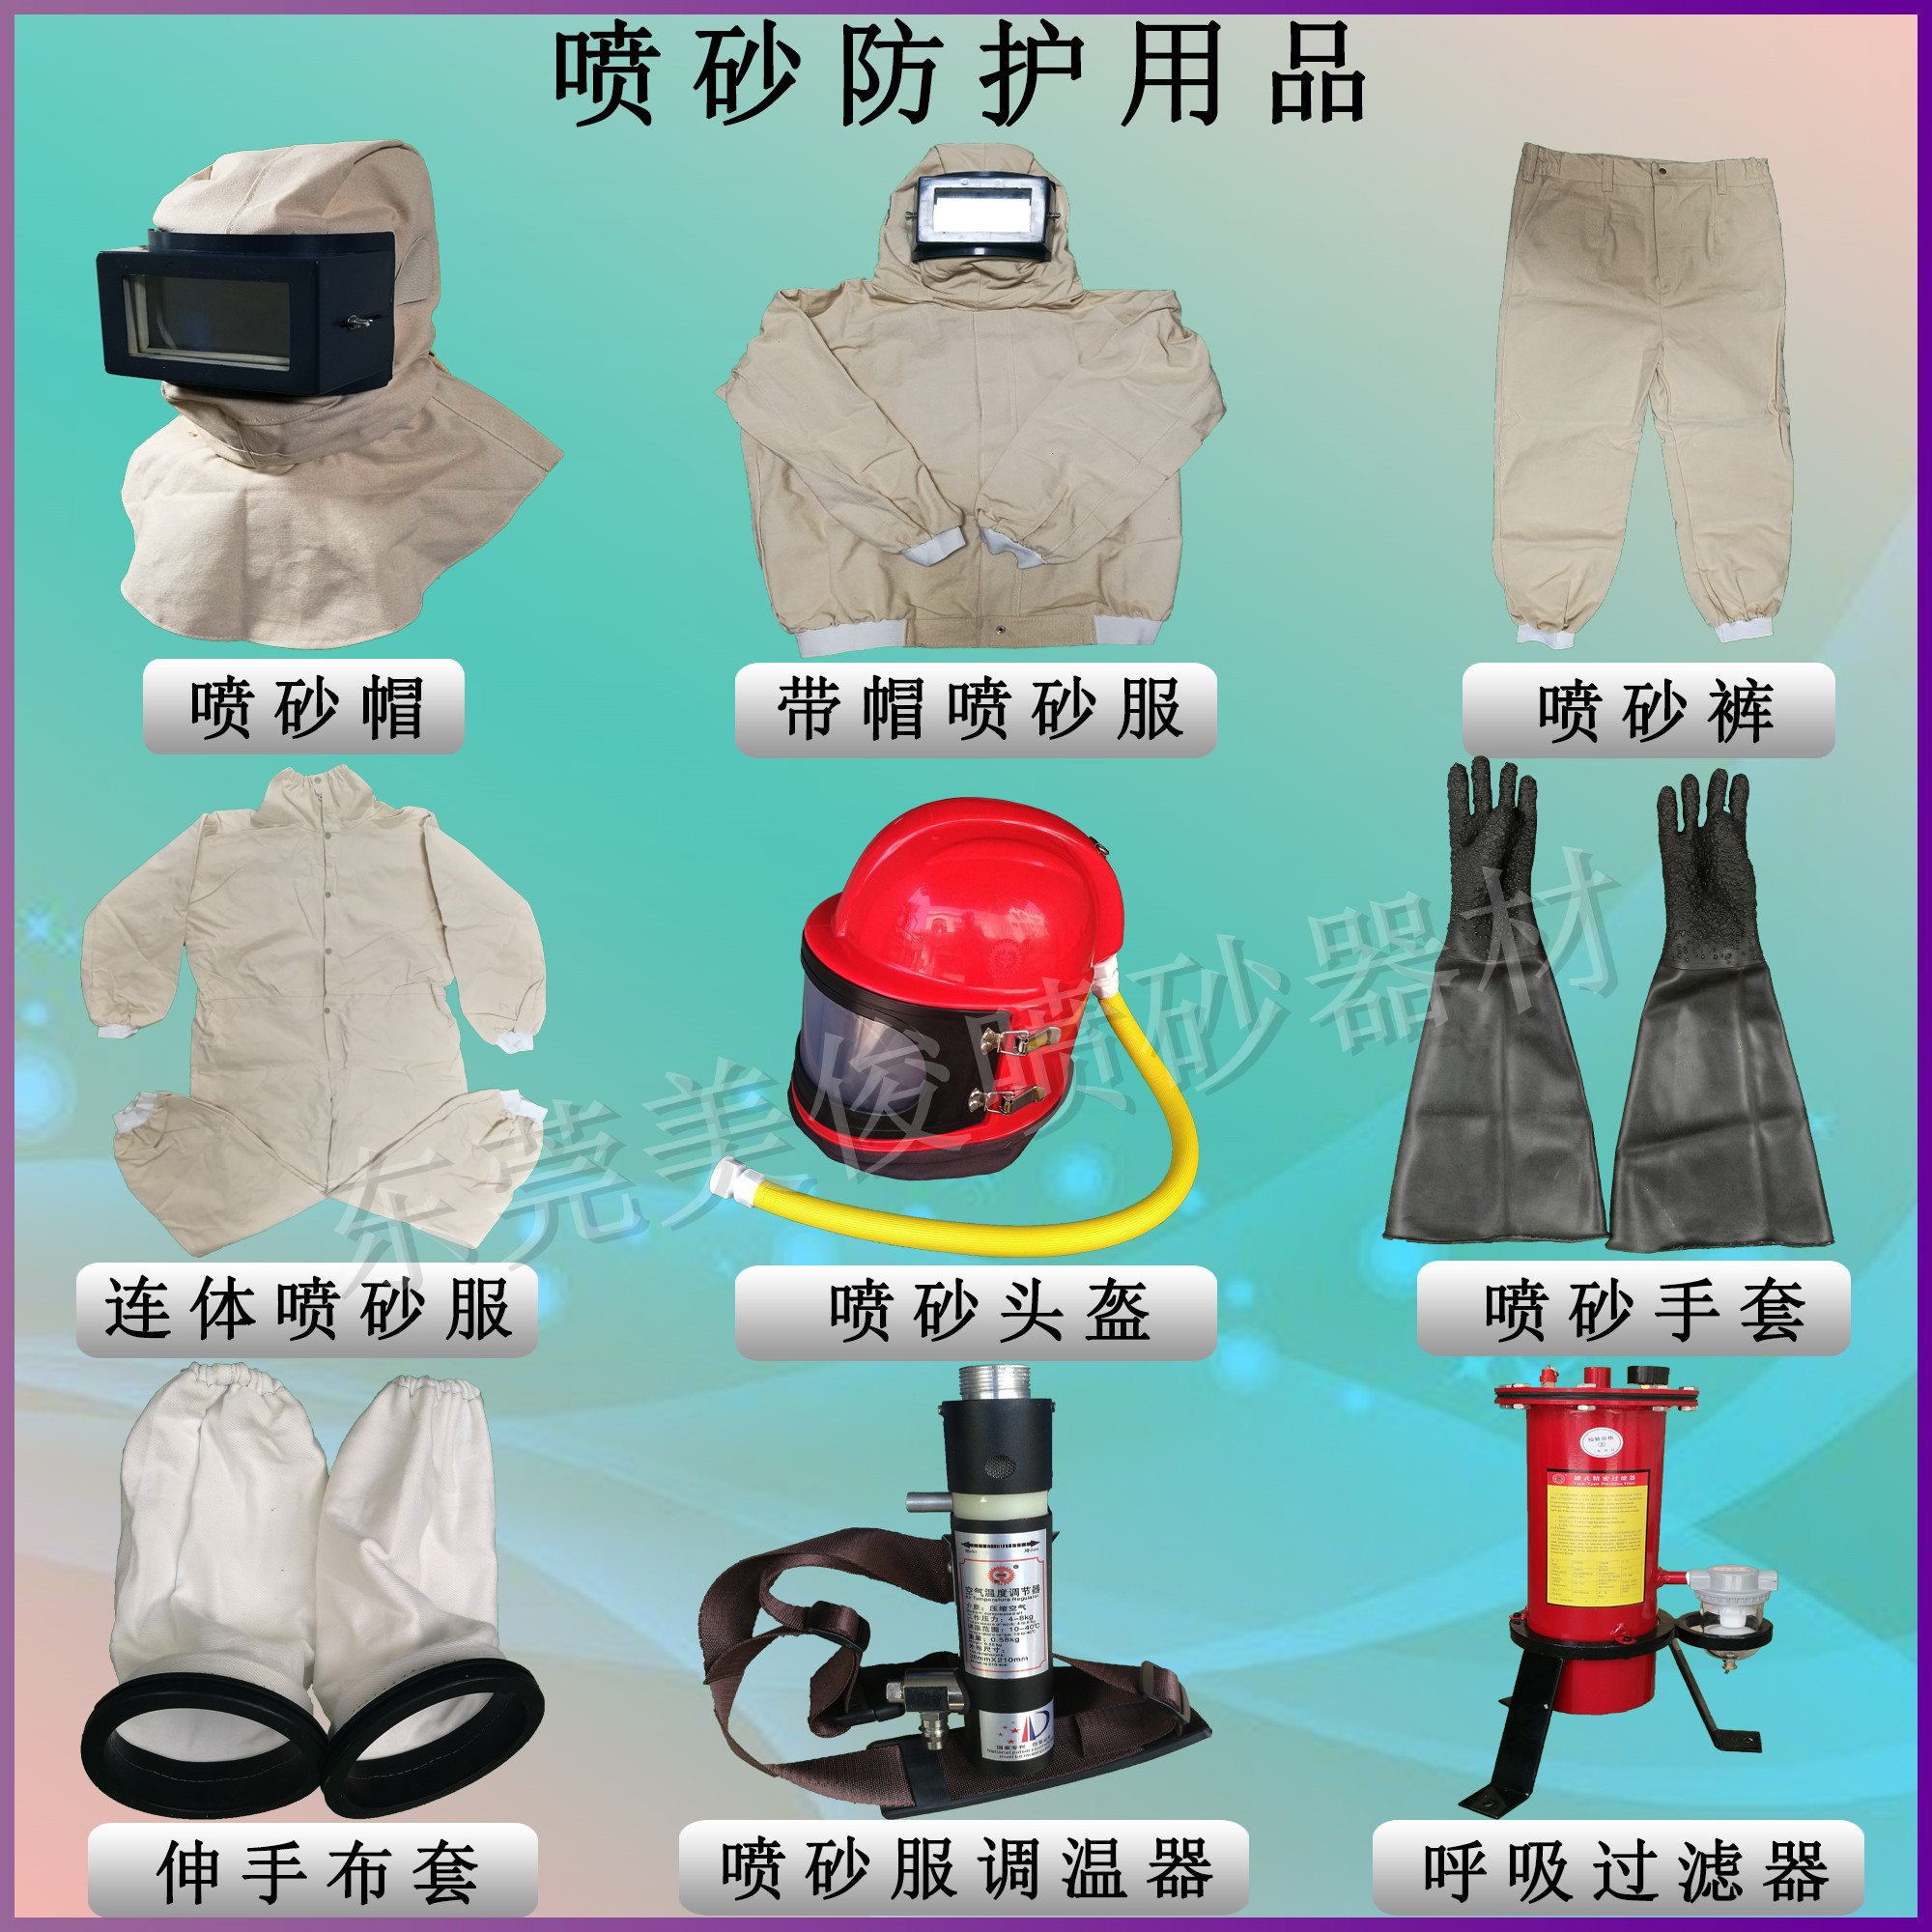 Sandblasting helmets, sandblasting caps, sandblasting suits, sandblasting protective equipment